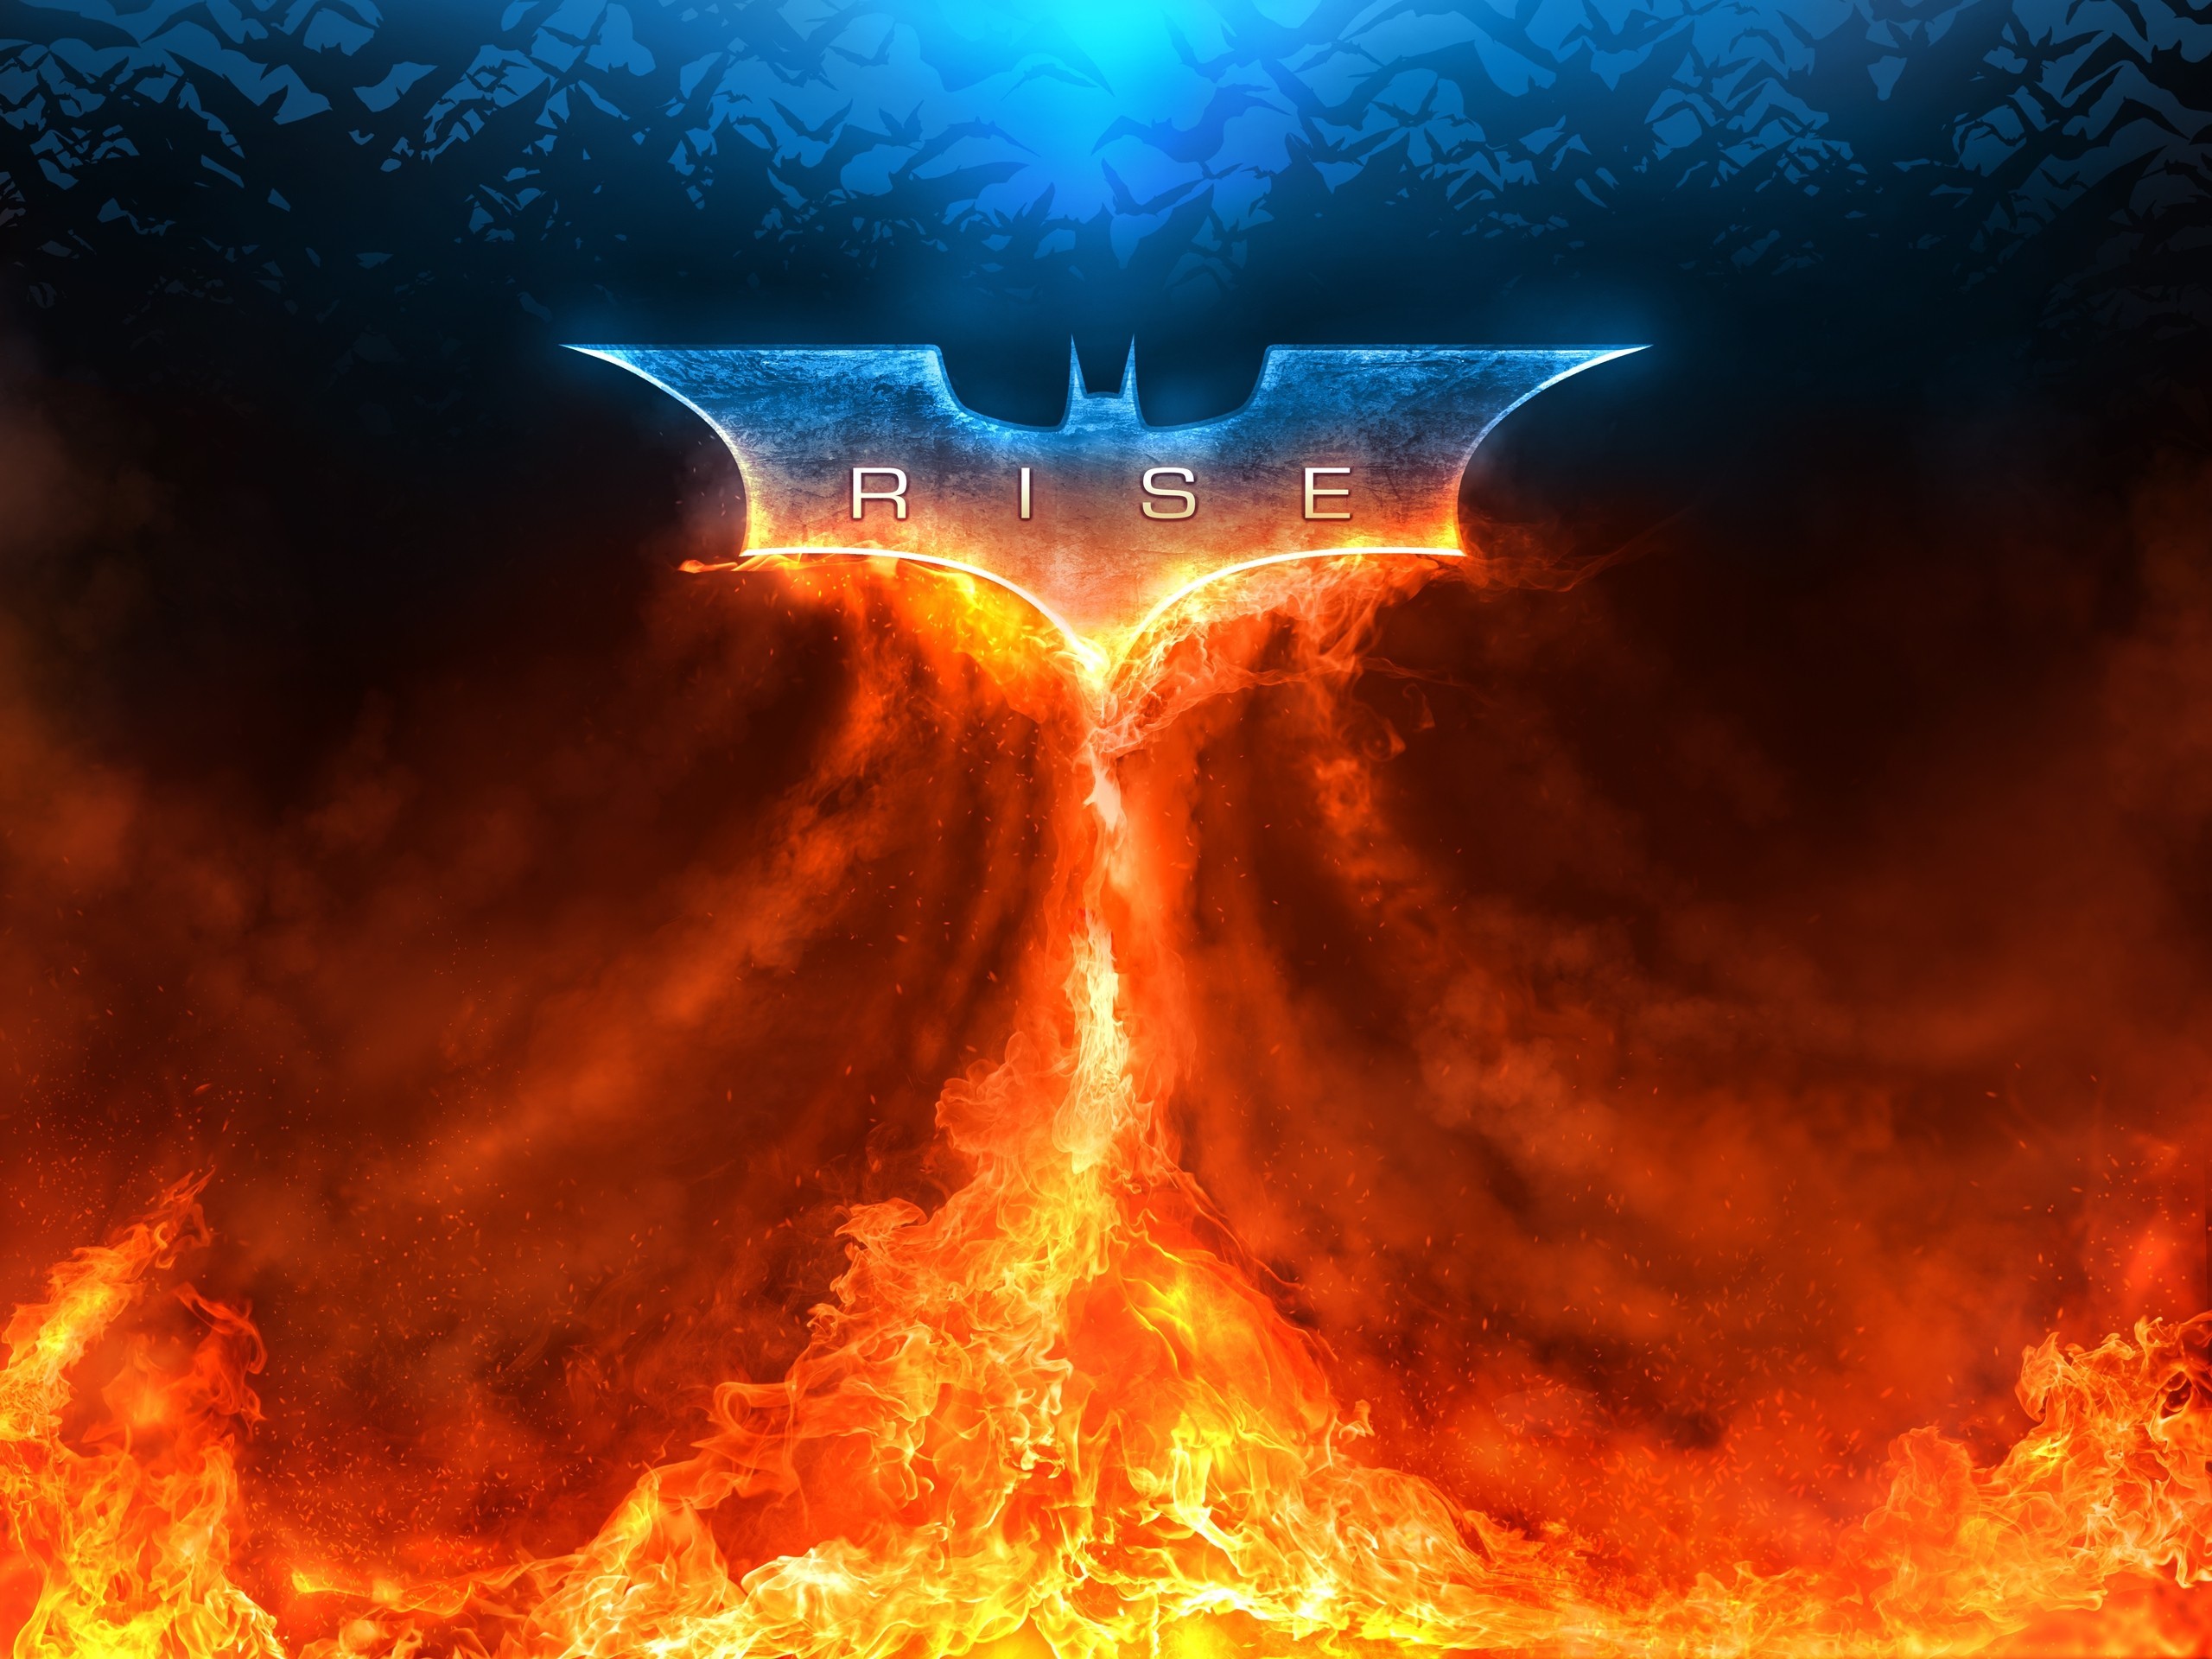 General 2560x1920 The Dark Knight Rises Batman movies Batman logo fire Flame Painter burning digital art